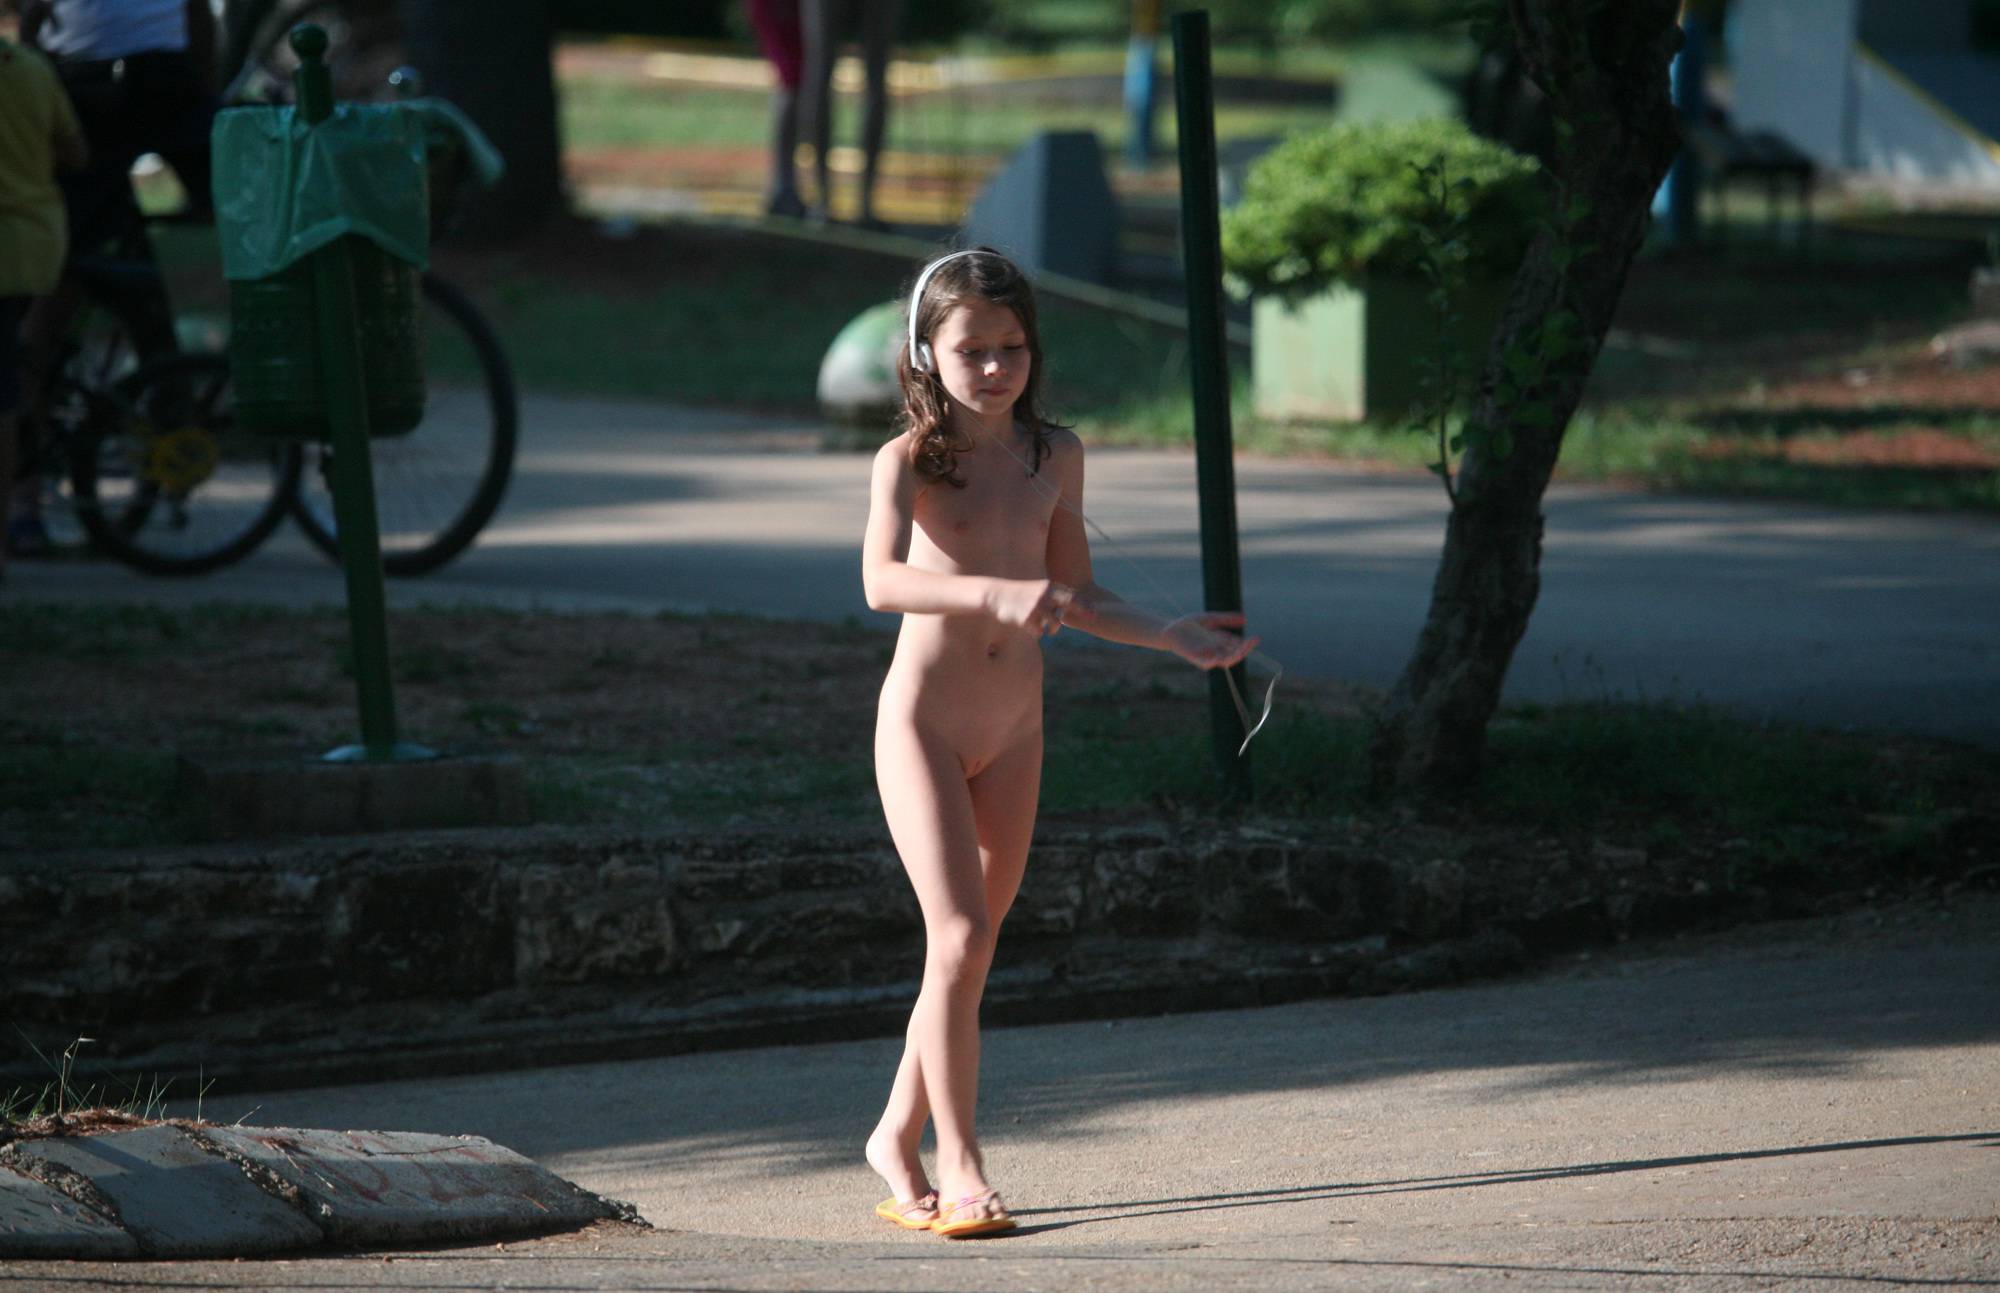 Nudist Life Girl Playing Her MP3 Player - 2